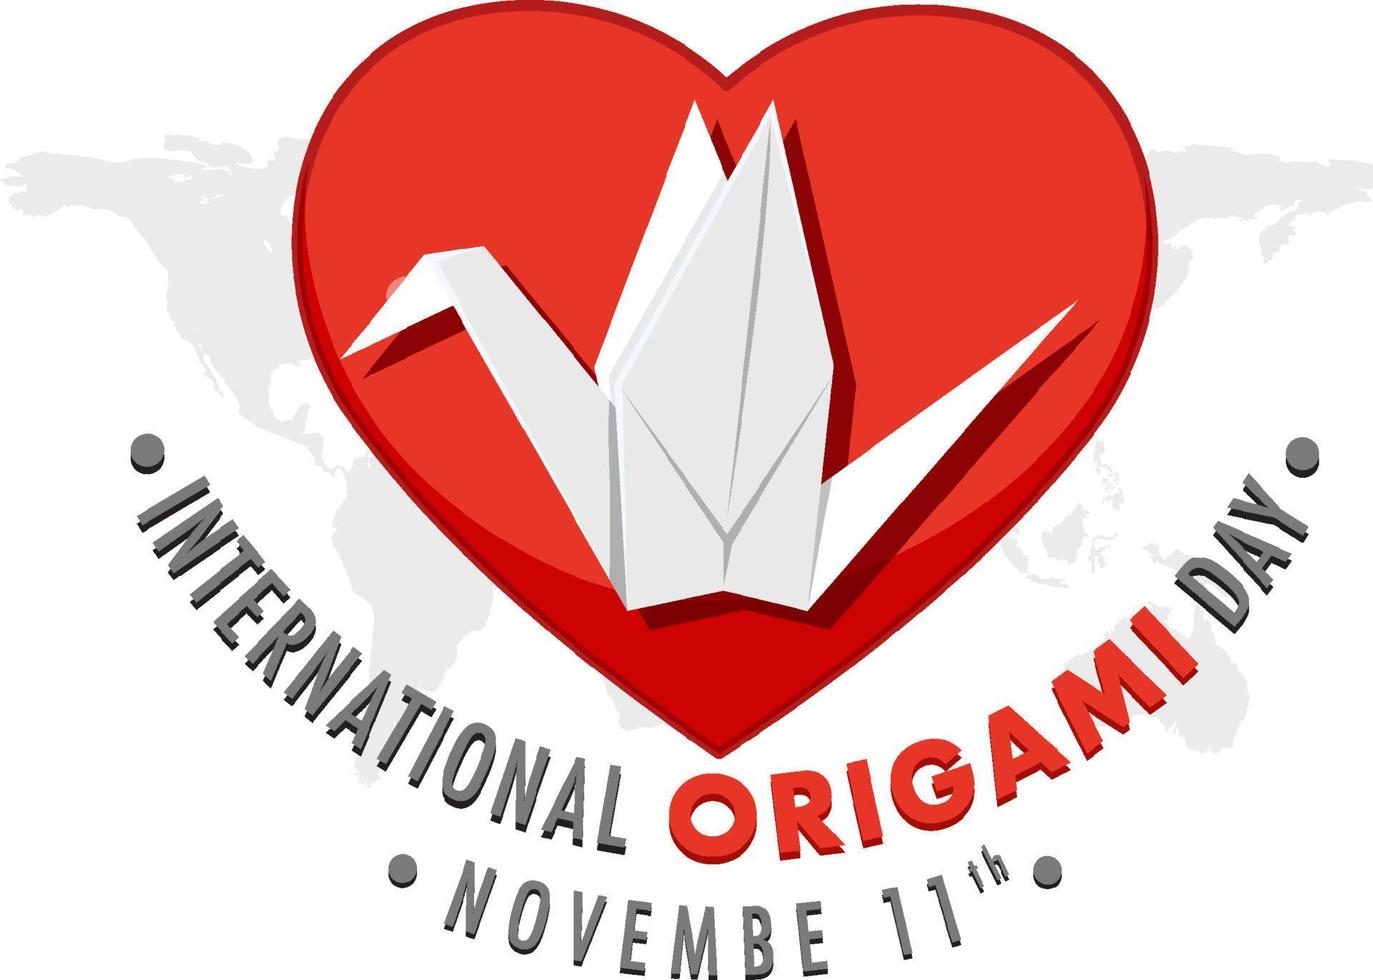 Internationale origami dag logo ontwerp vector